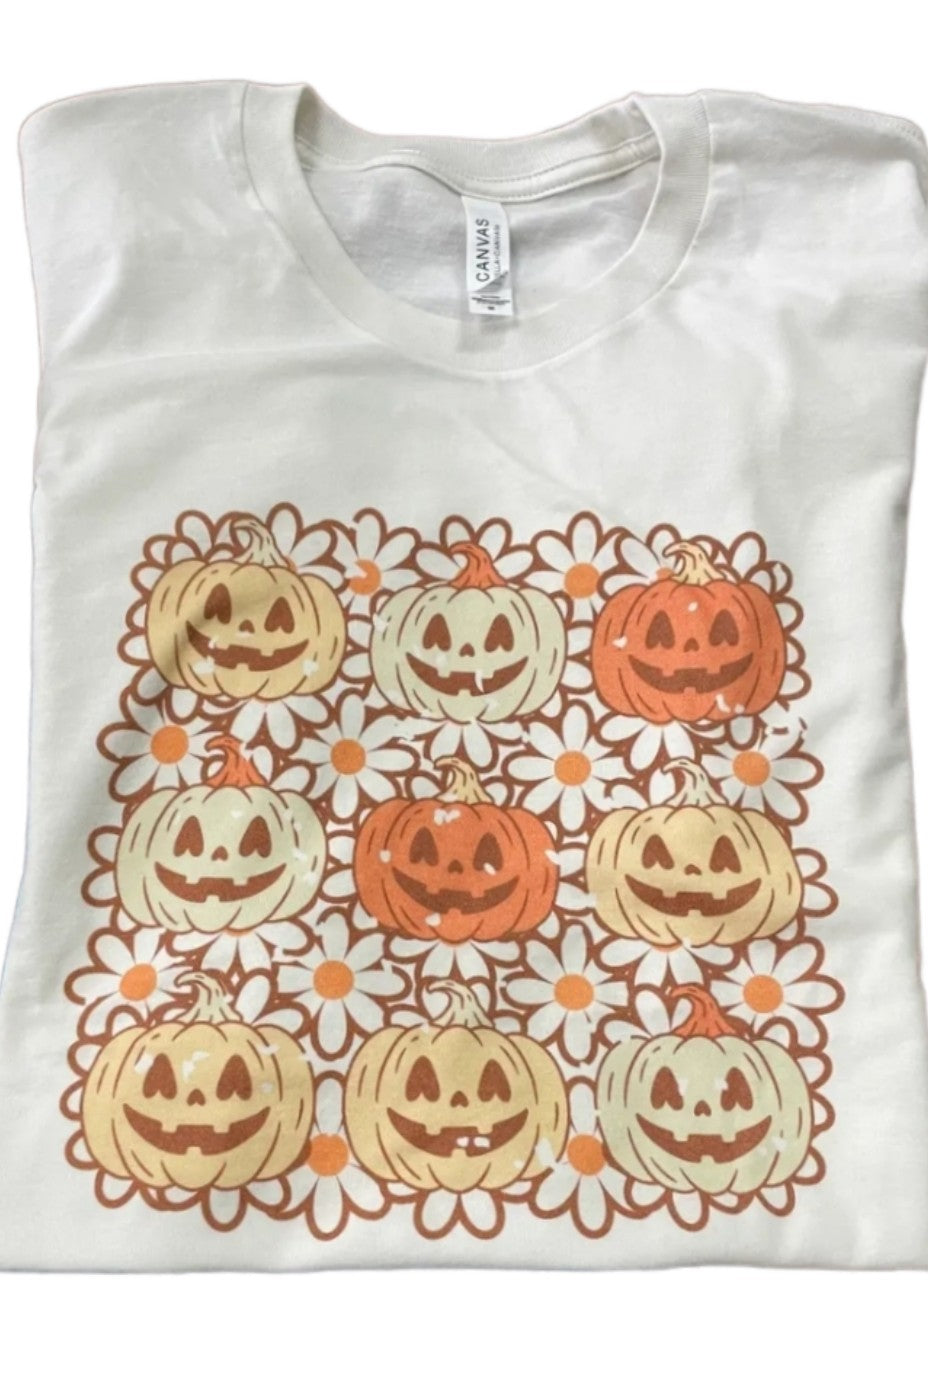 Retro Pumpkins & Daisy White Graphic Tee